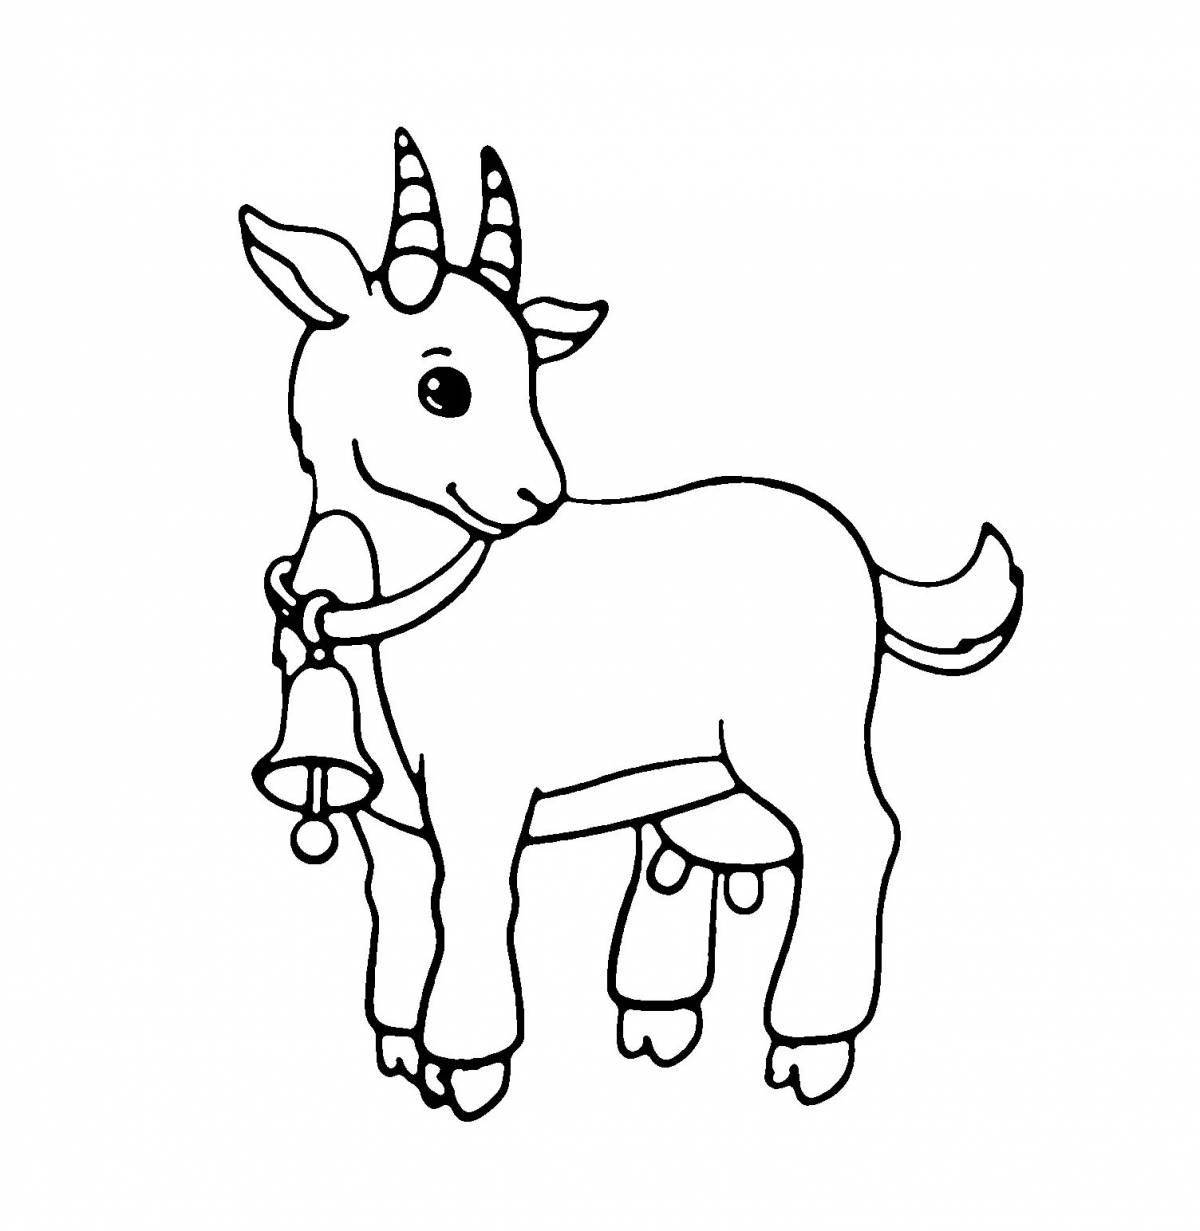 Unique goat coloring page for kids